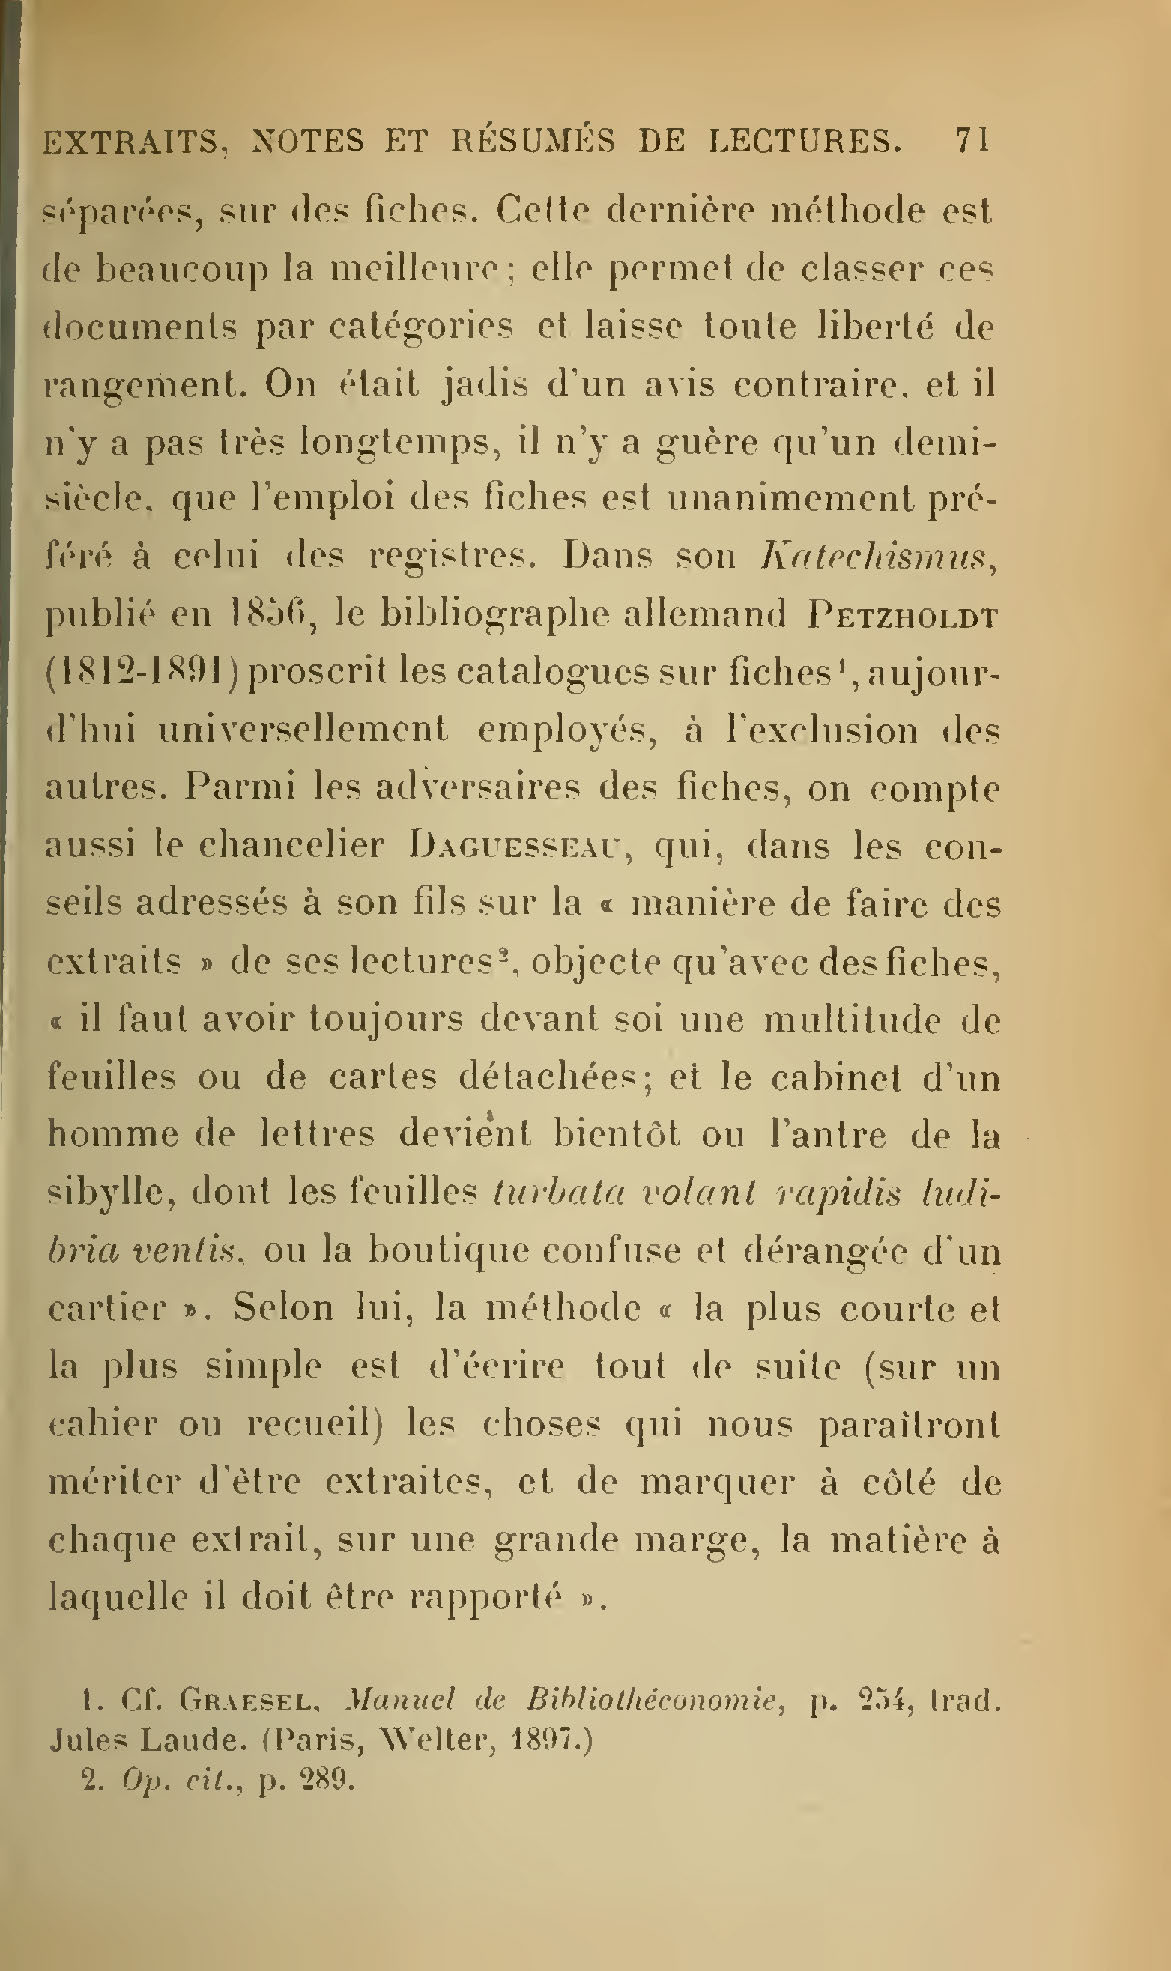 Albert Cim, Le Livre, t. II, p. 071.